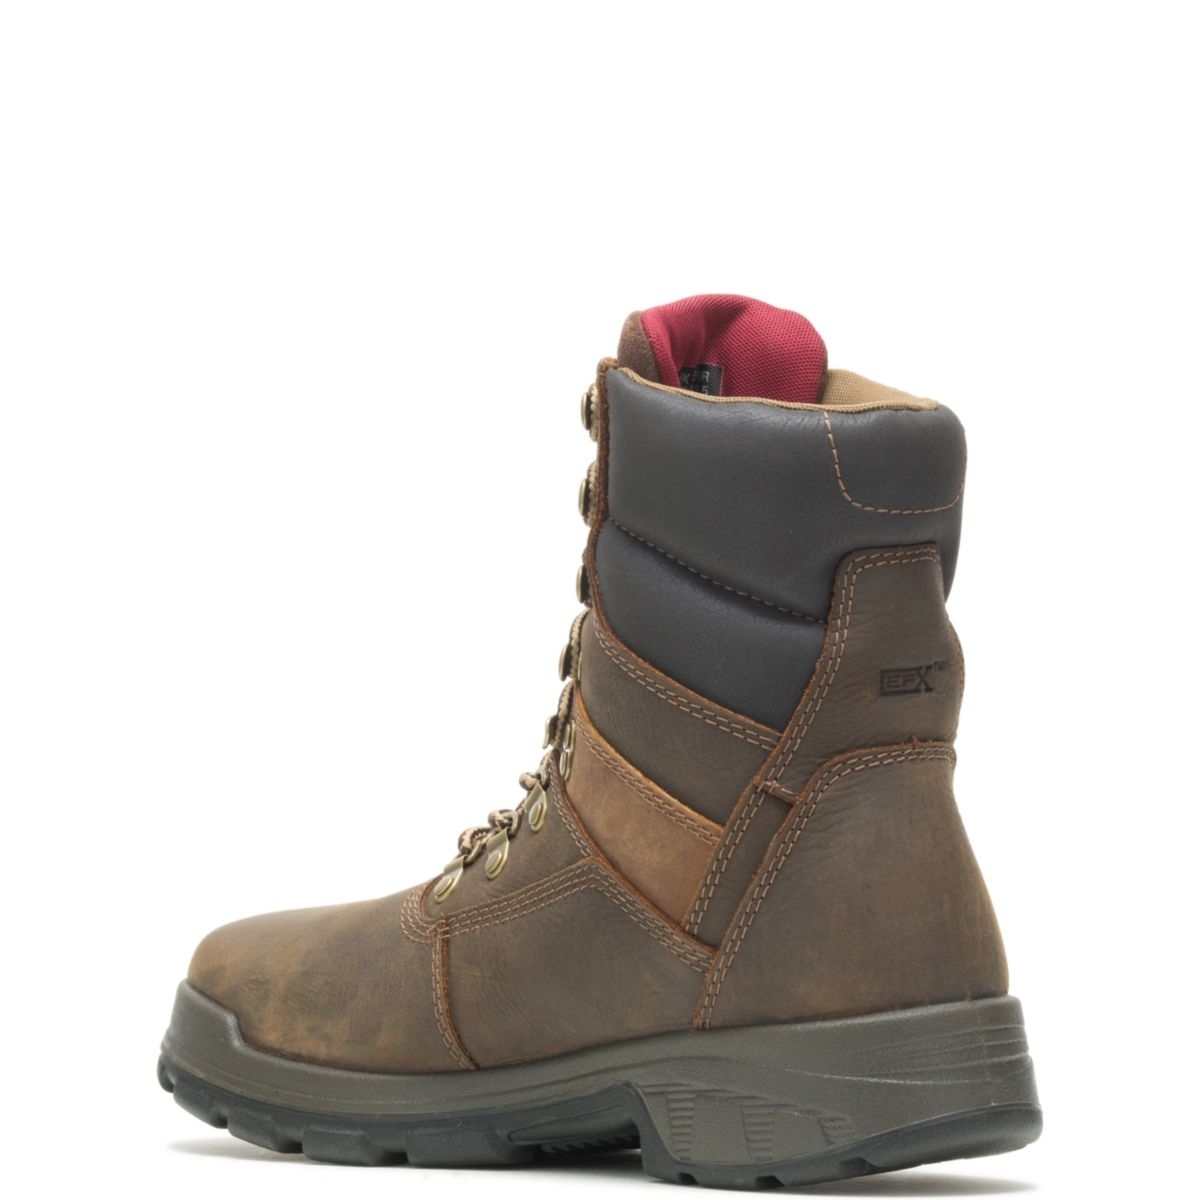 WOLVERINE Men's Cabor EPXÂ® 8 Waterproof Composite Toe Work Boot Dark Brown - W10316 BROWN - BROWN, 10.5-D